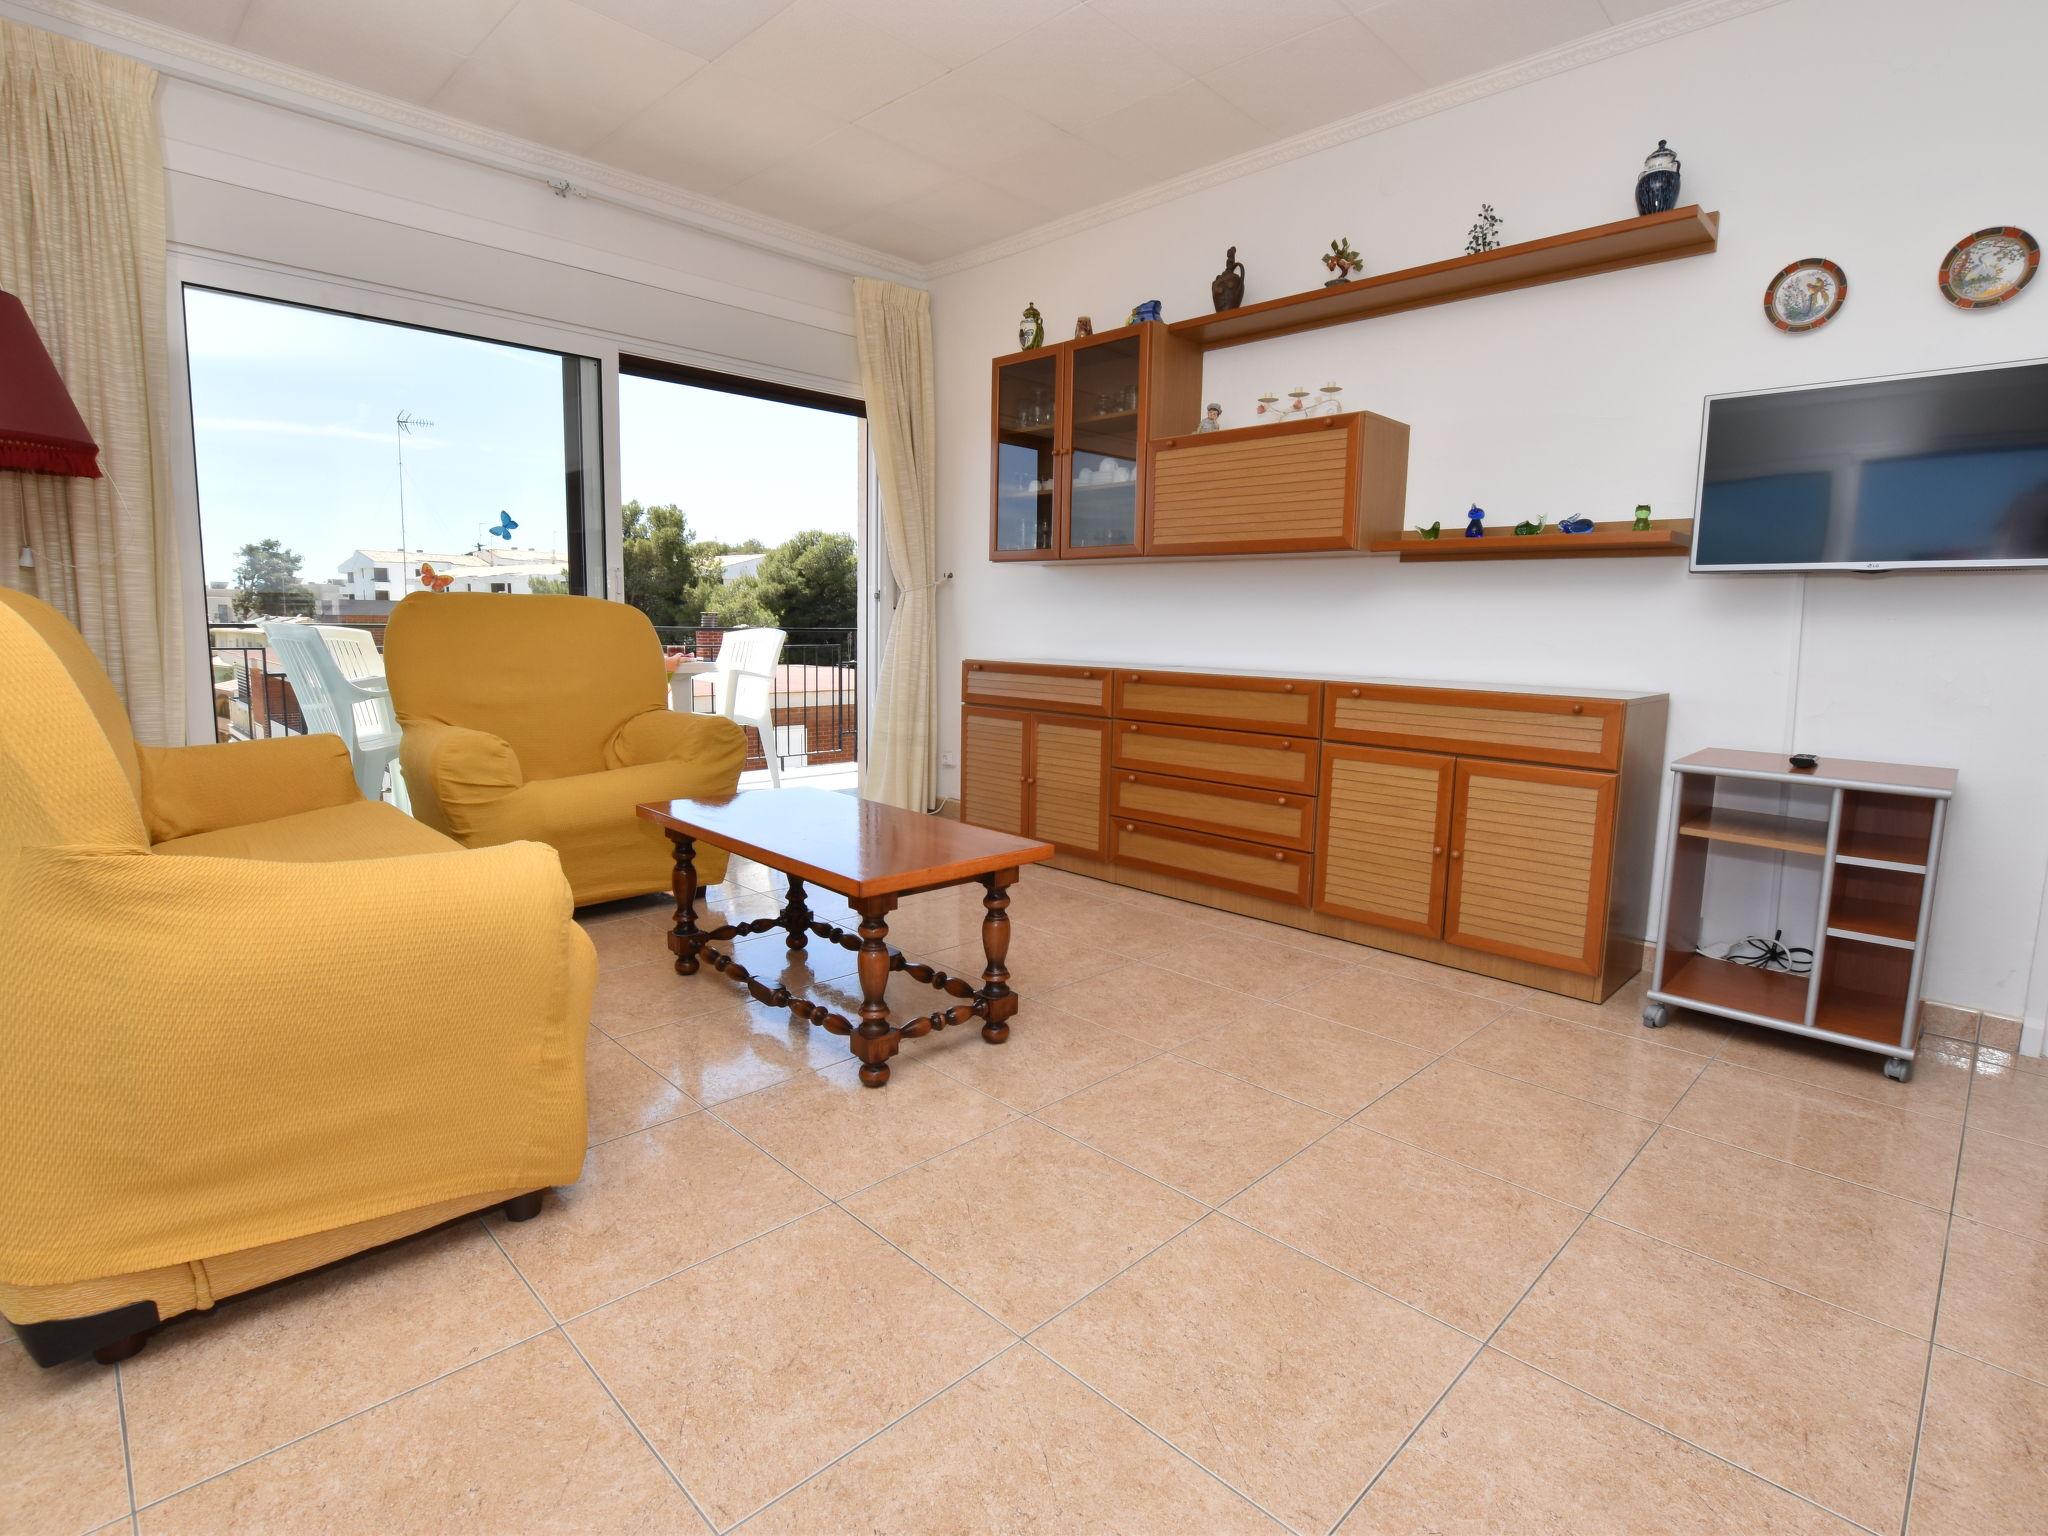 Photo 9 - Appartement de 3 chambres à Torredembarra avec terrasse et vues à la mer